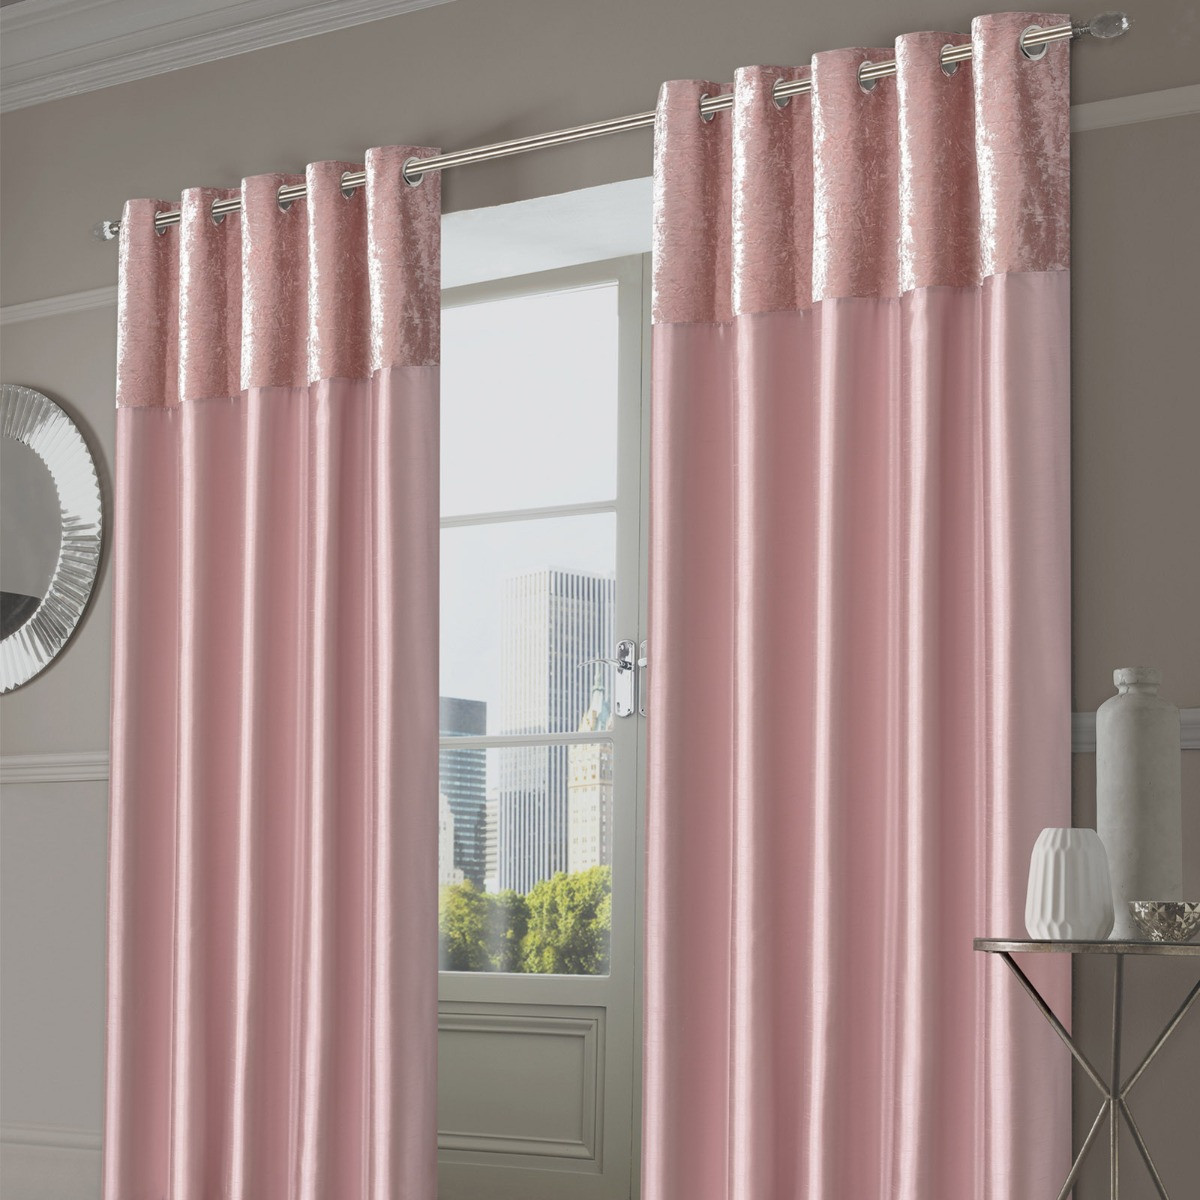 Sienna Home Manhattan Crushed Velvet Band Eyelet Curtains - Blush Pink, 46" x 72">